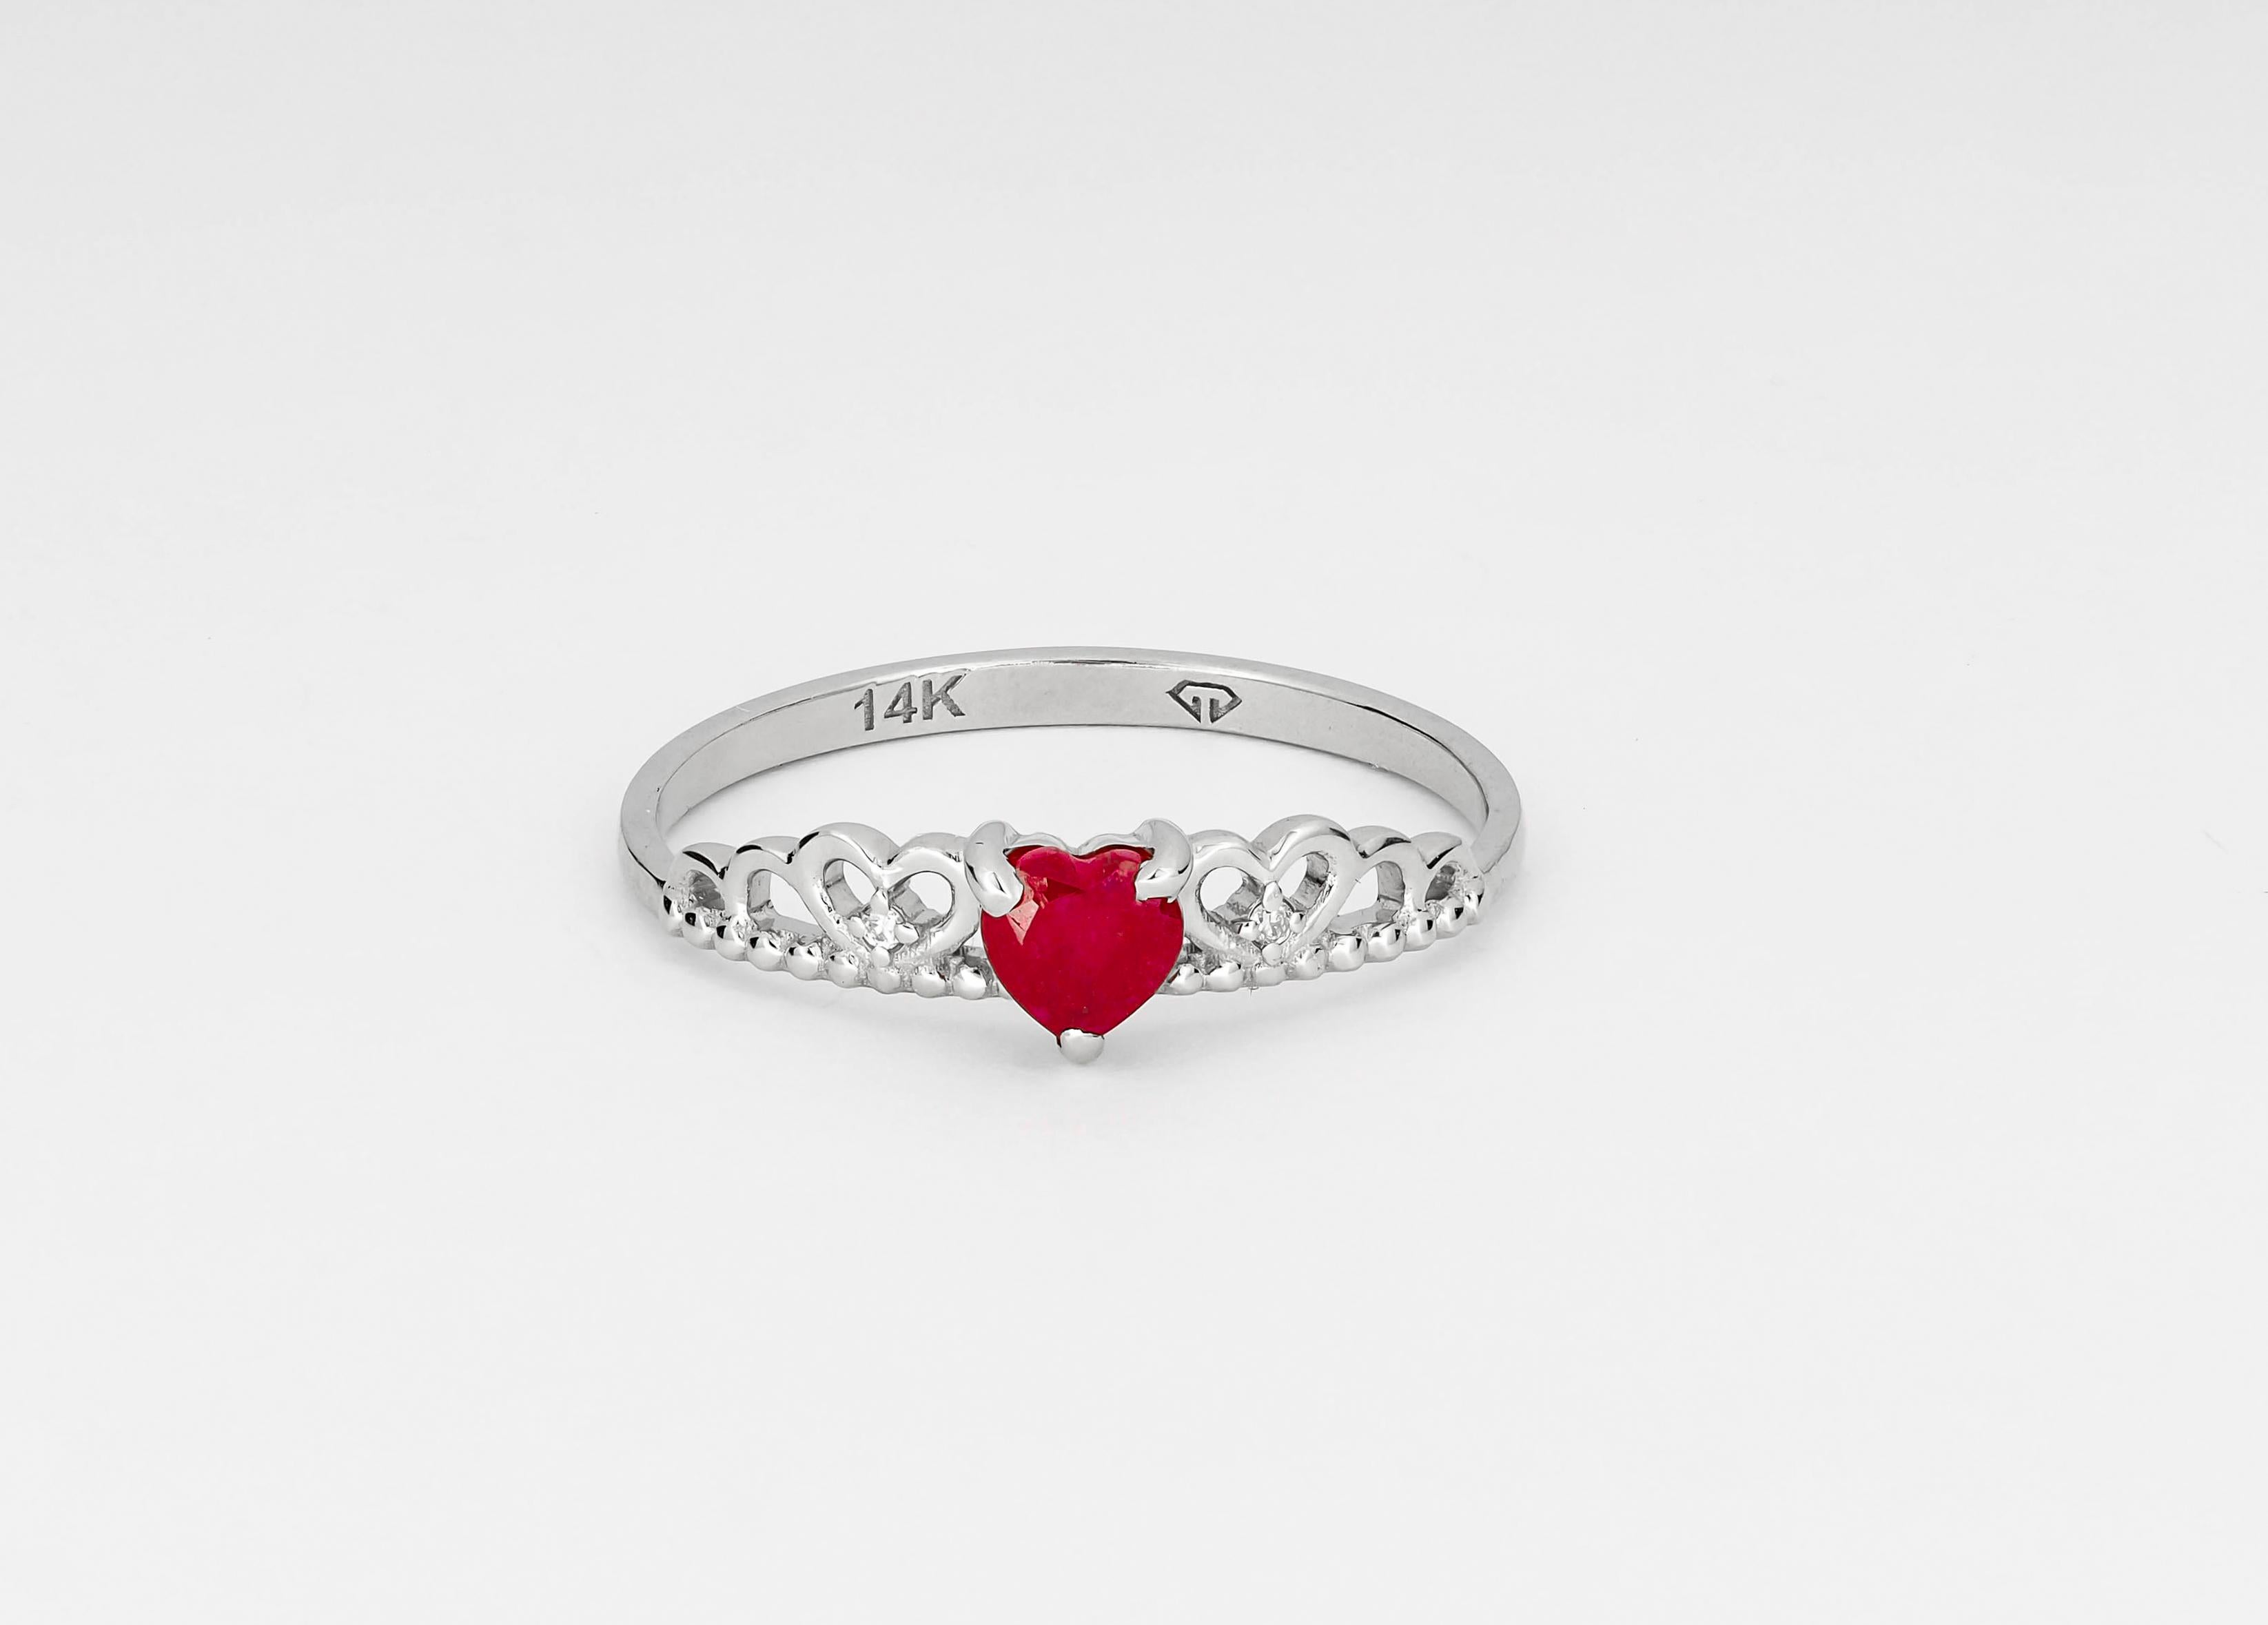 Heart Cut Ruby gold ring. 